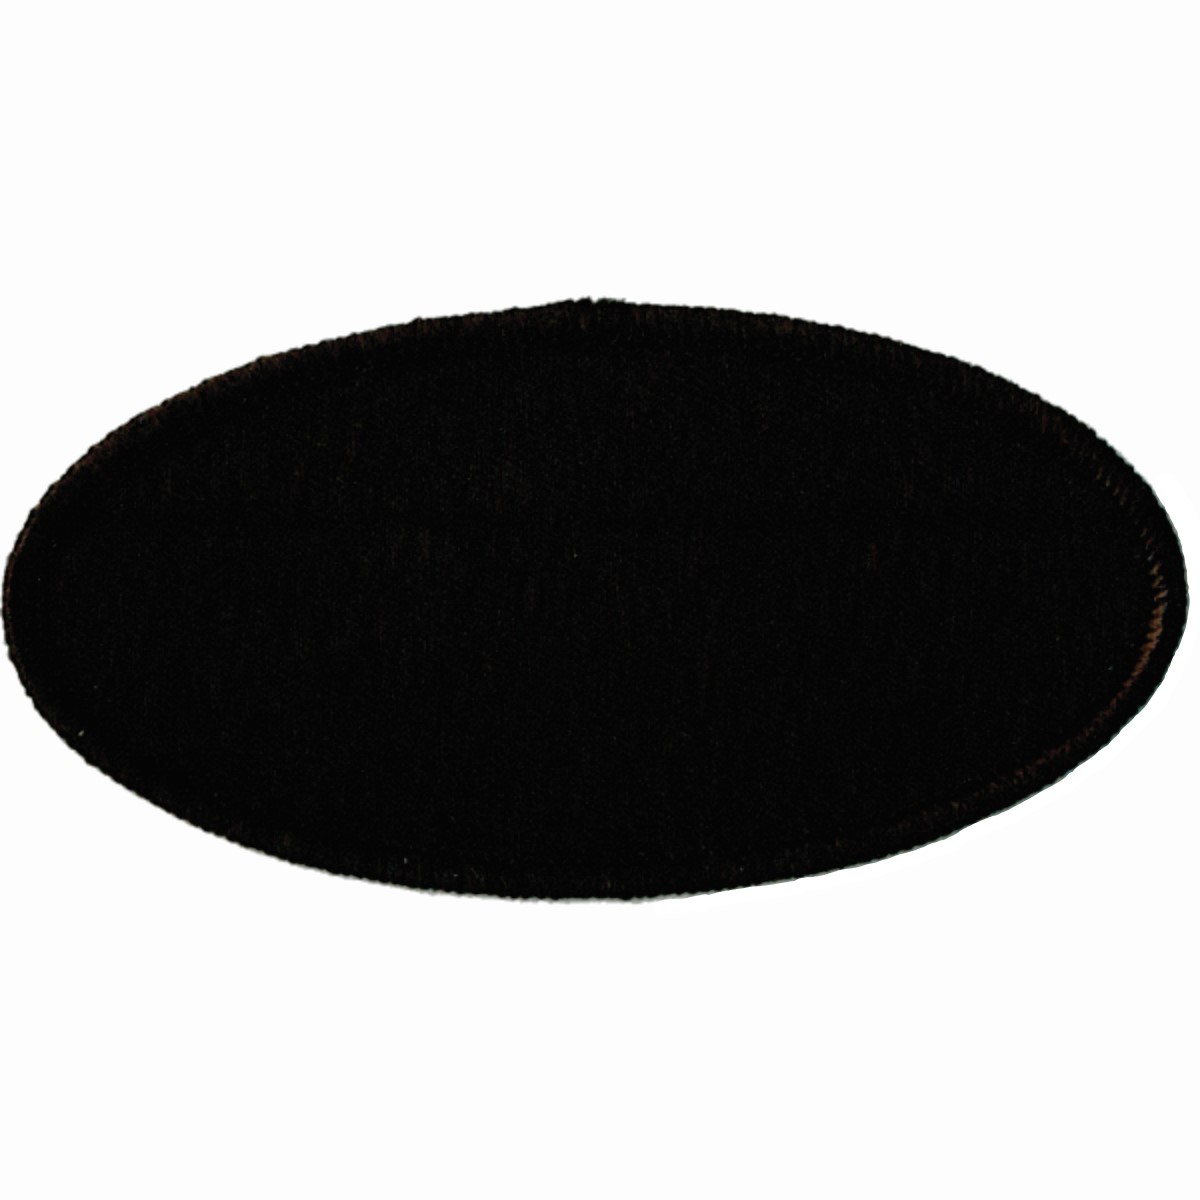 Oval Blank Patch 2 x 4 White Patch w/Black